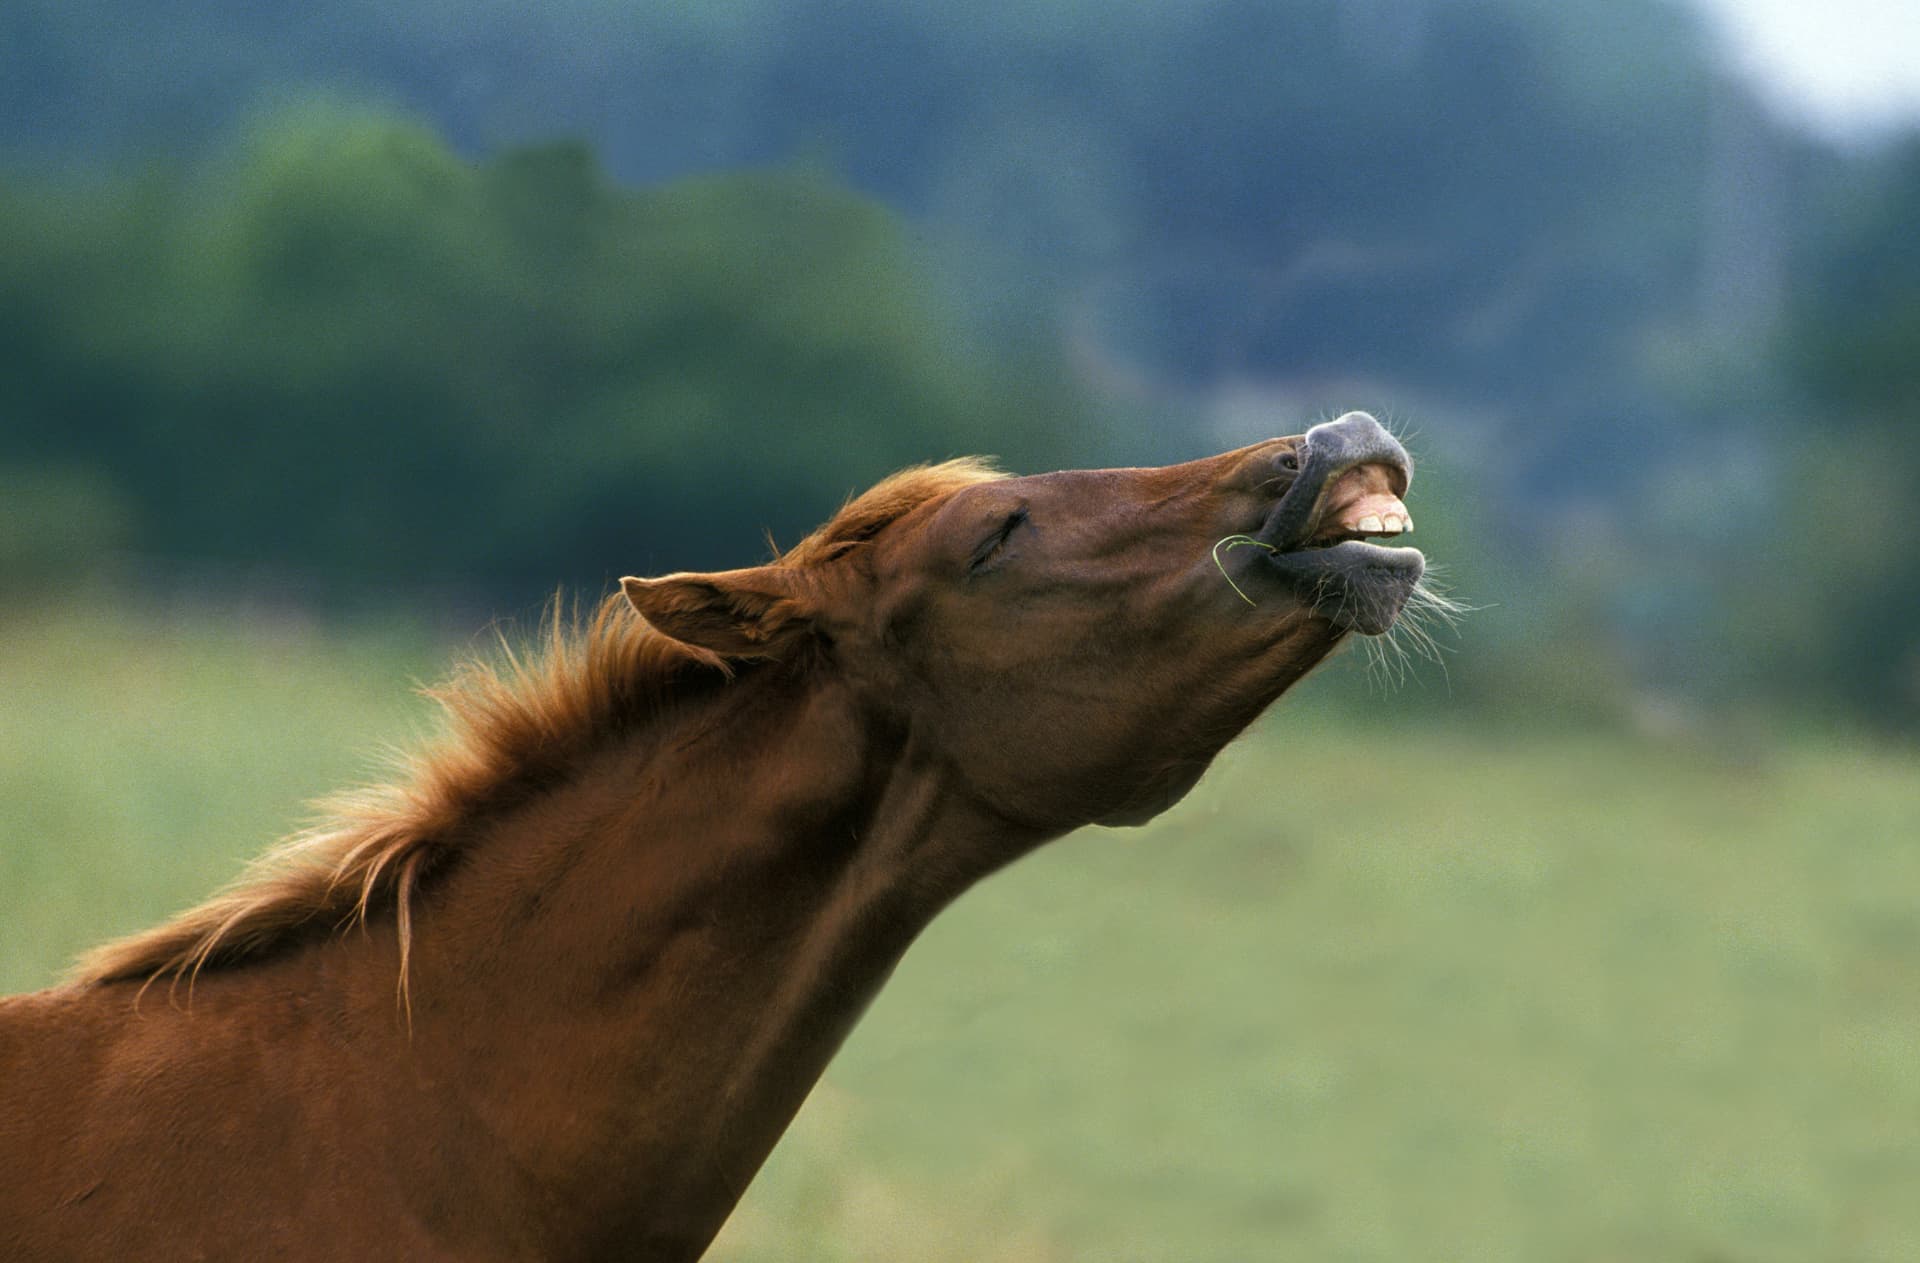 how many teeth hhc horses have